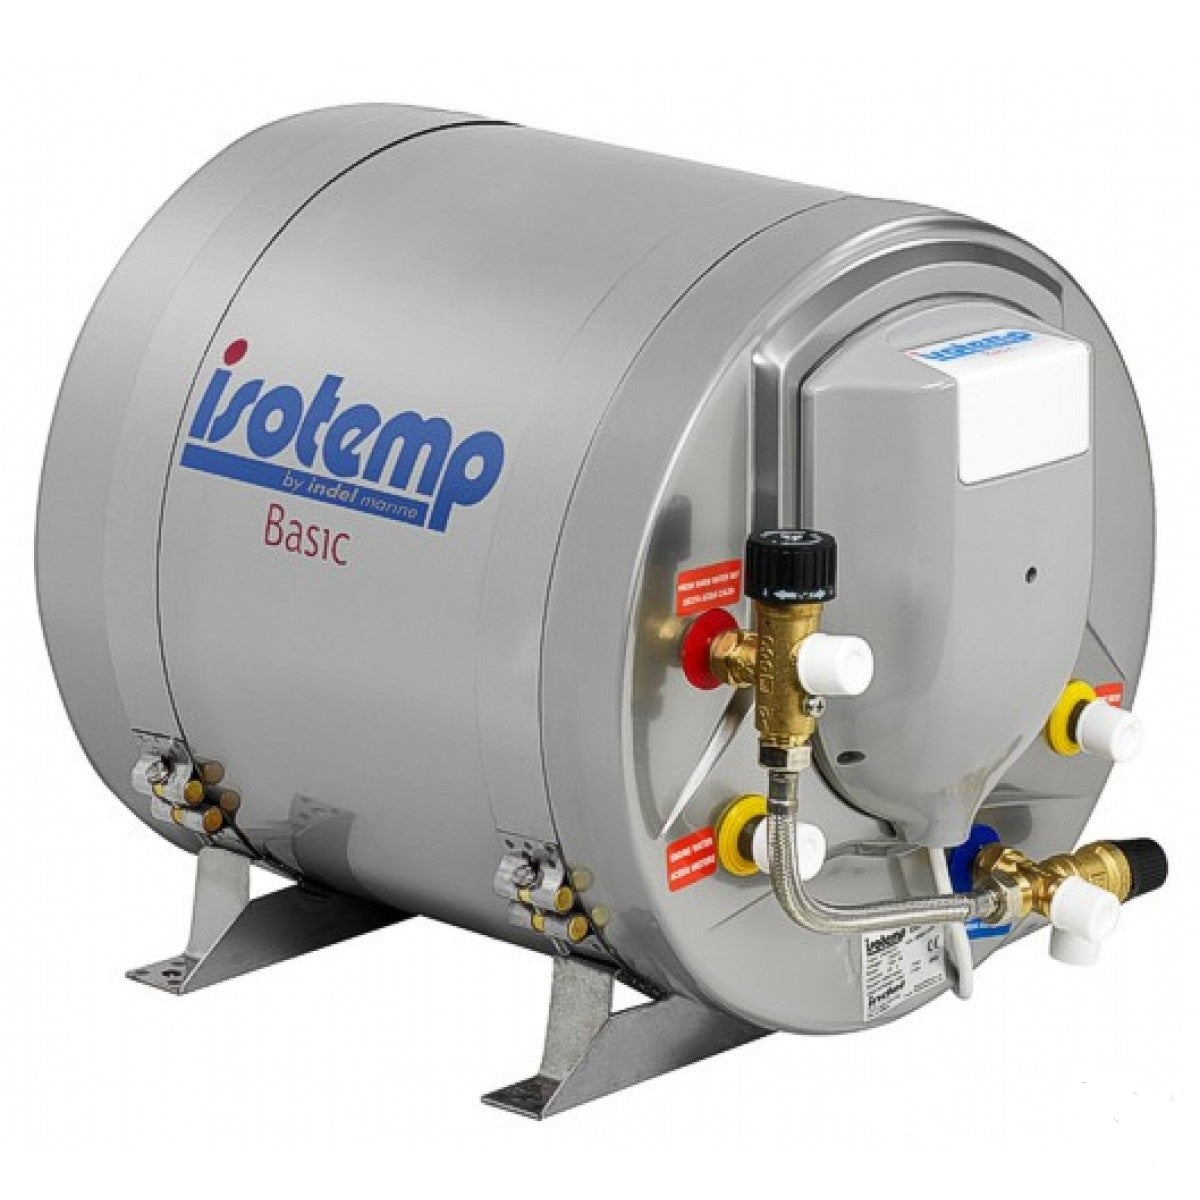 Isotemp Waterheater Basic 24L, 6.4 gallon 115V/750W with mixing valve, USA Plug